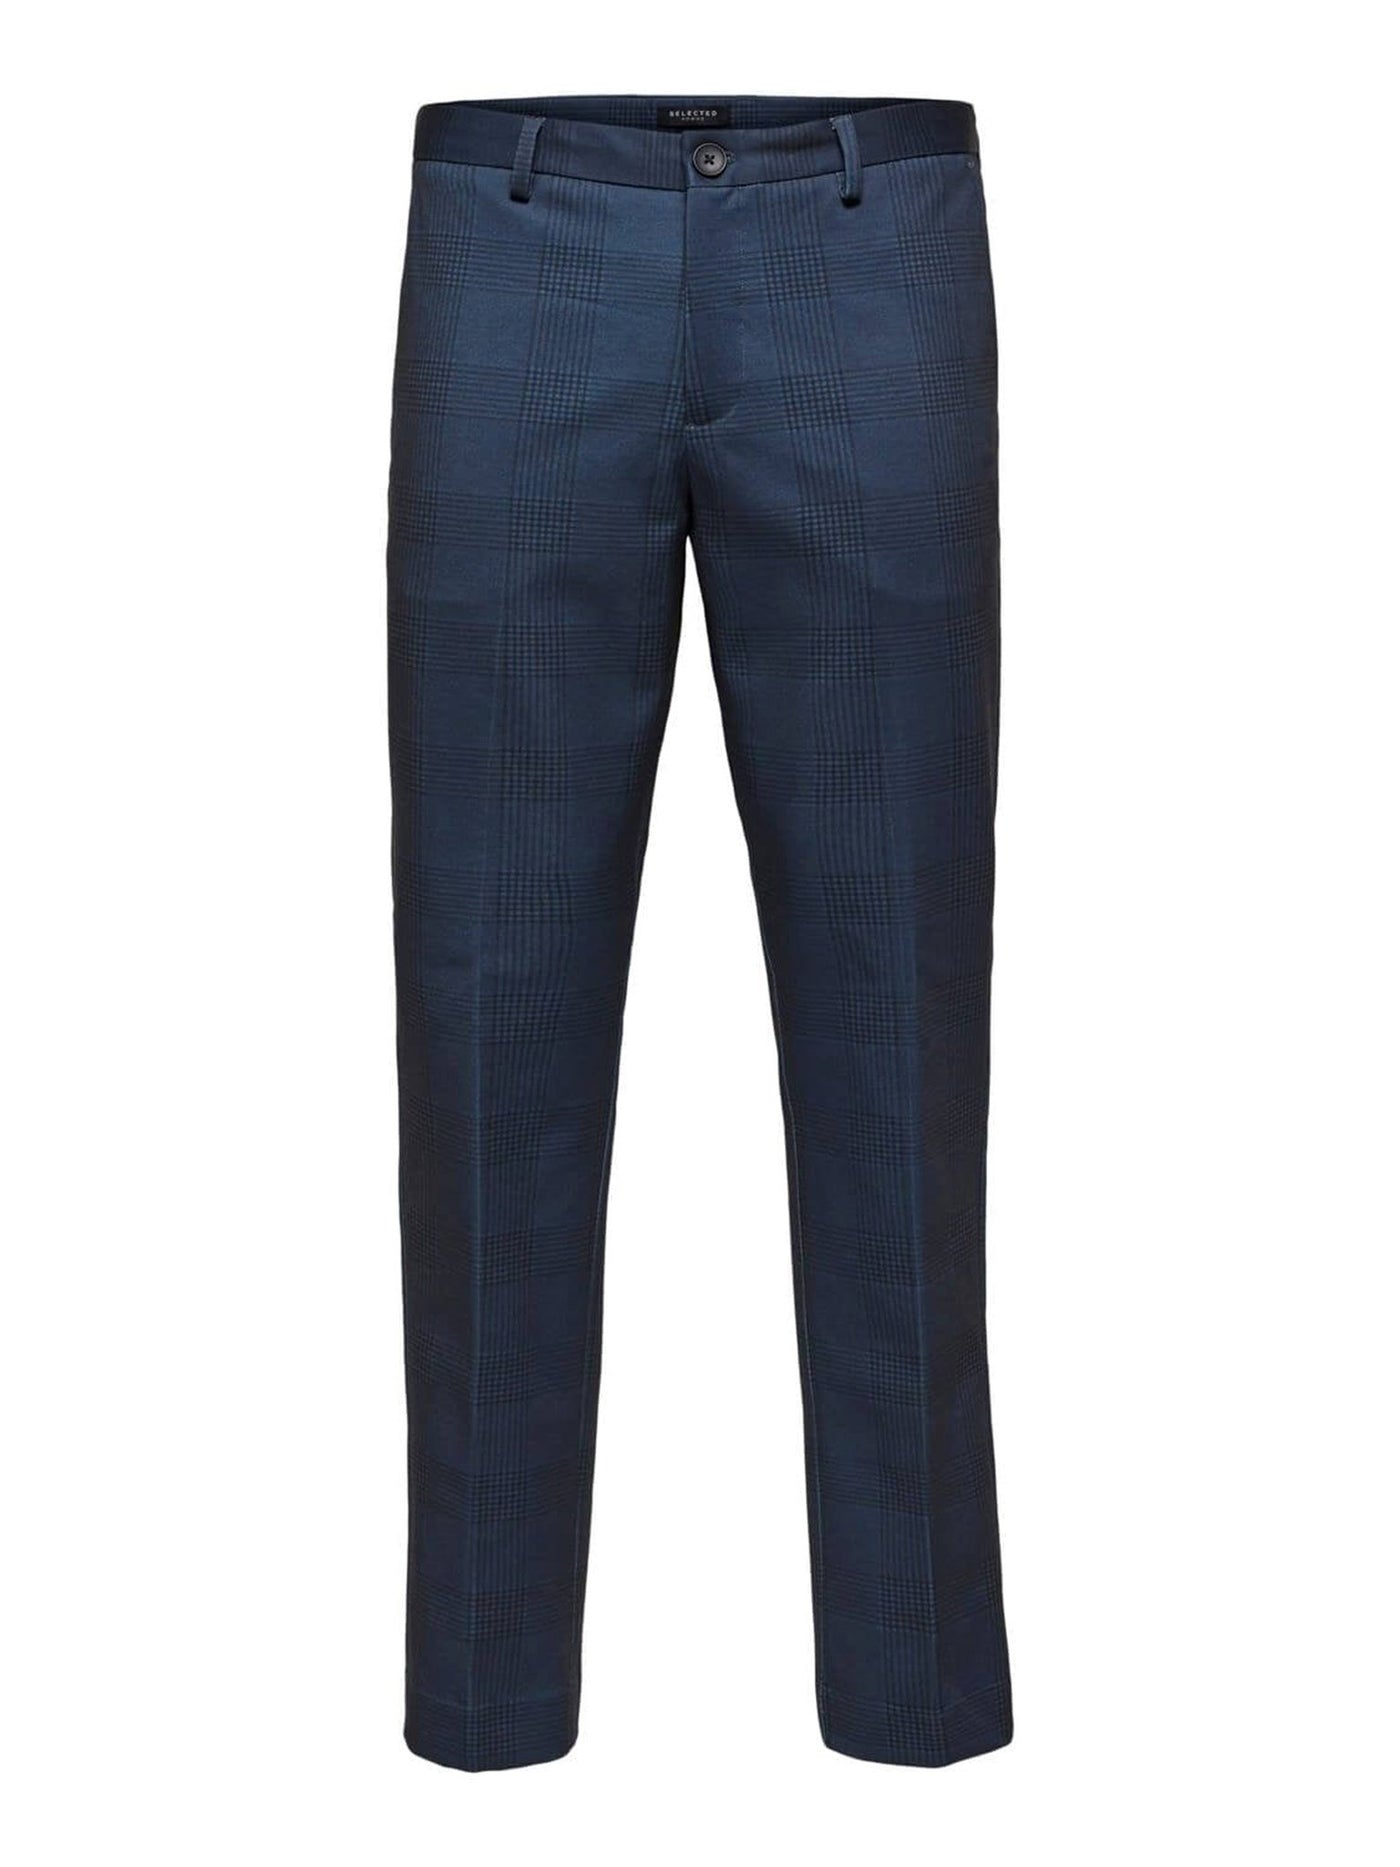 Aiden Suit Pants - Navy (ternet) - Selected Homme - Blå